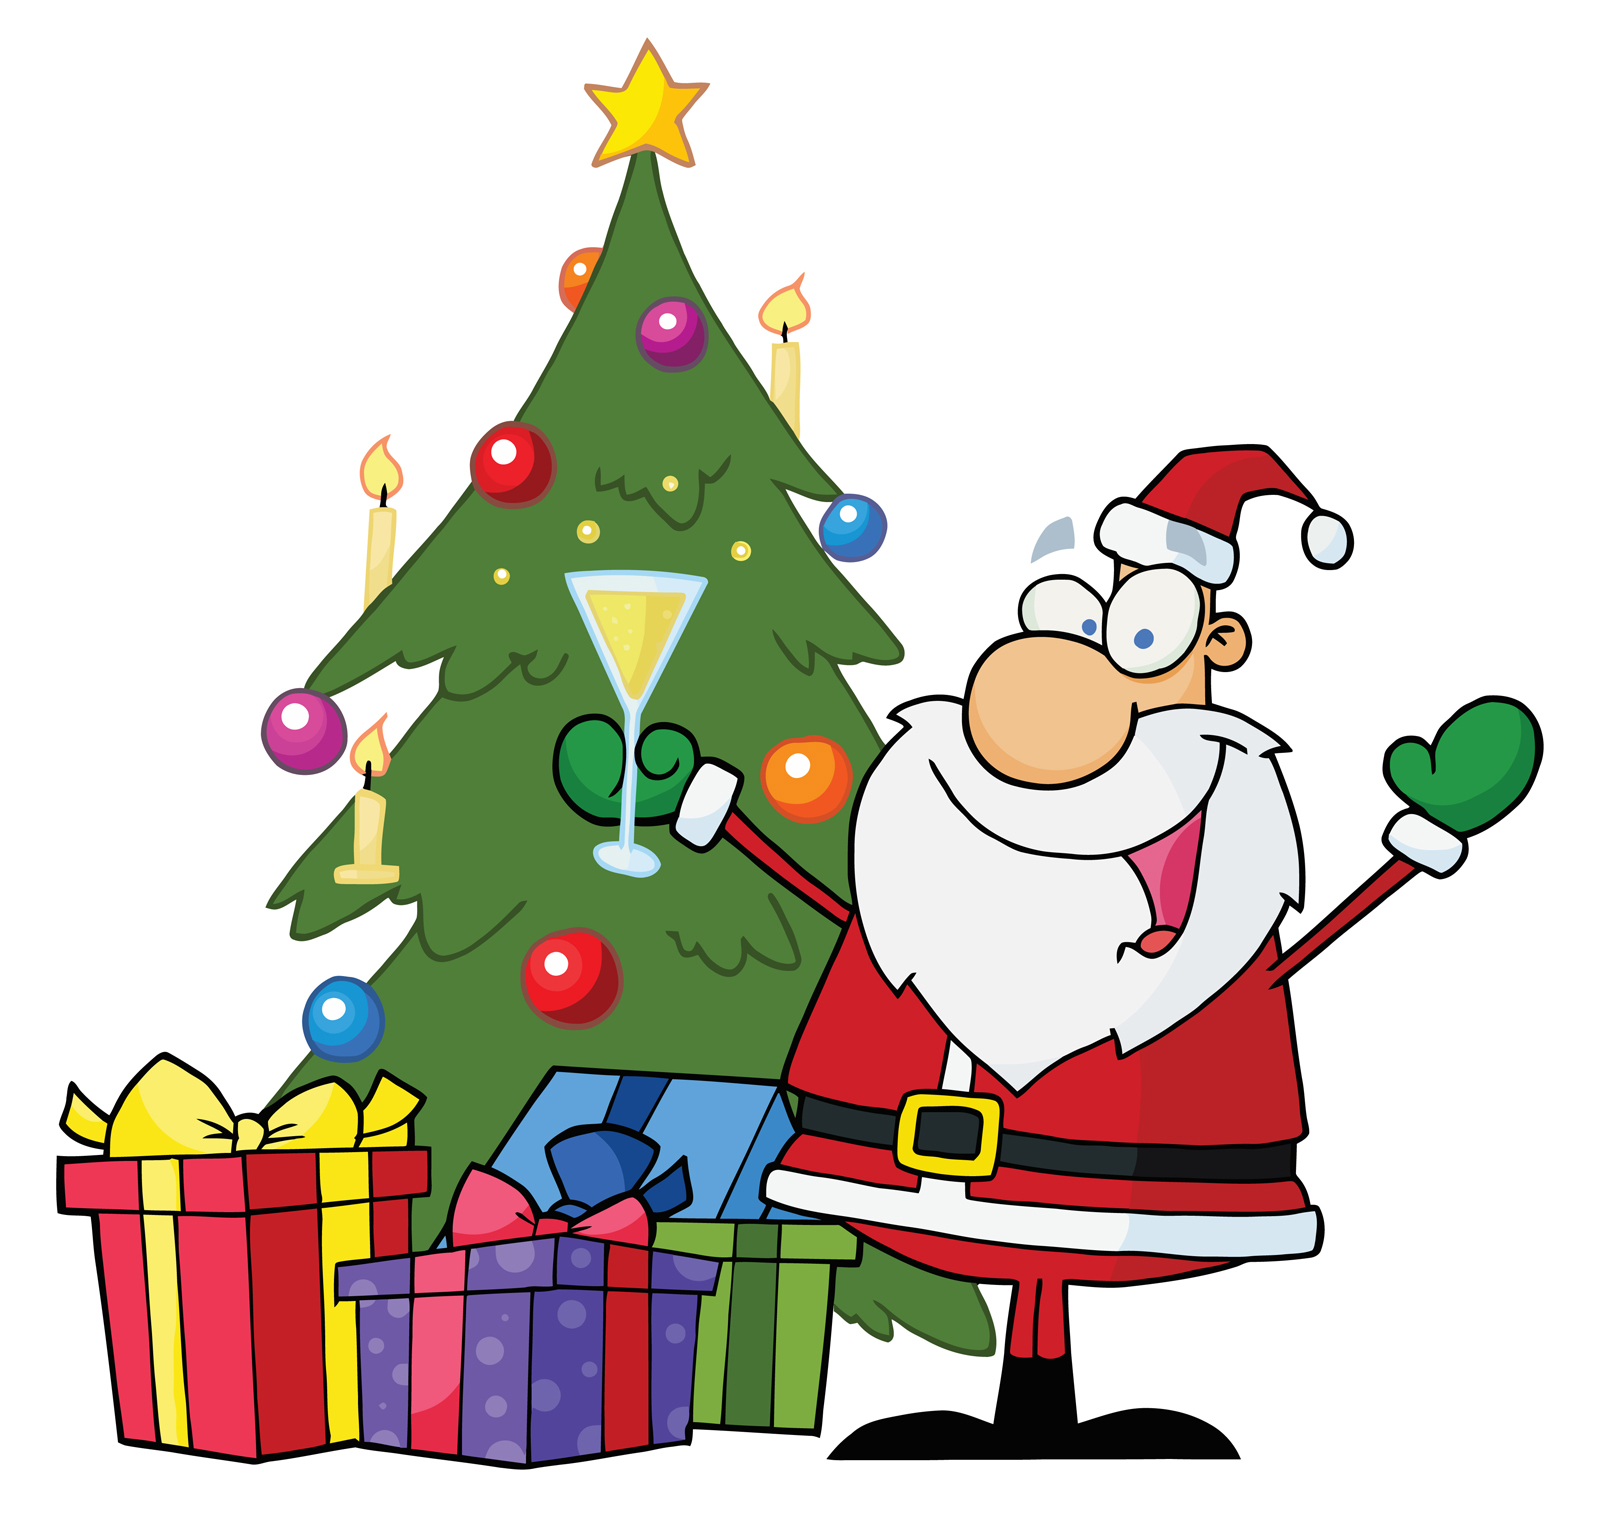 Xmas Stuff For > Christmas Presents Under Tree Clip Art